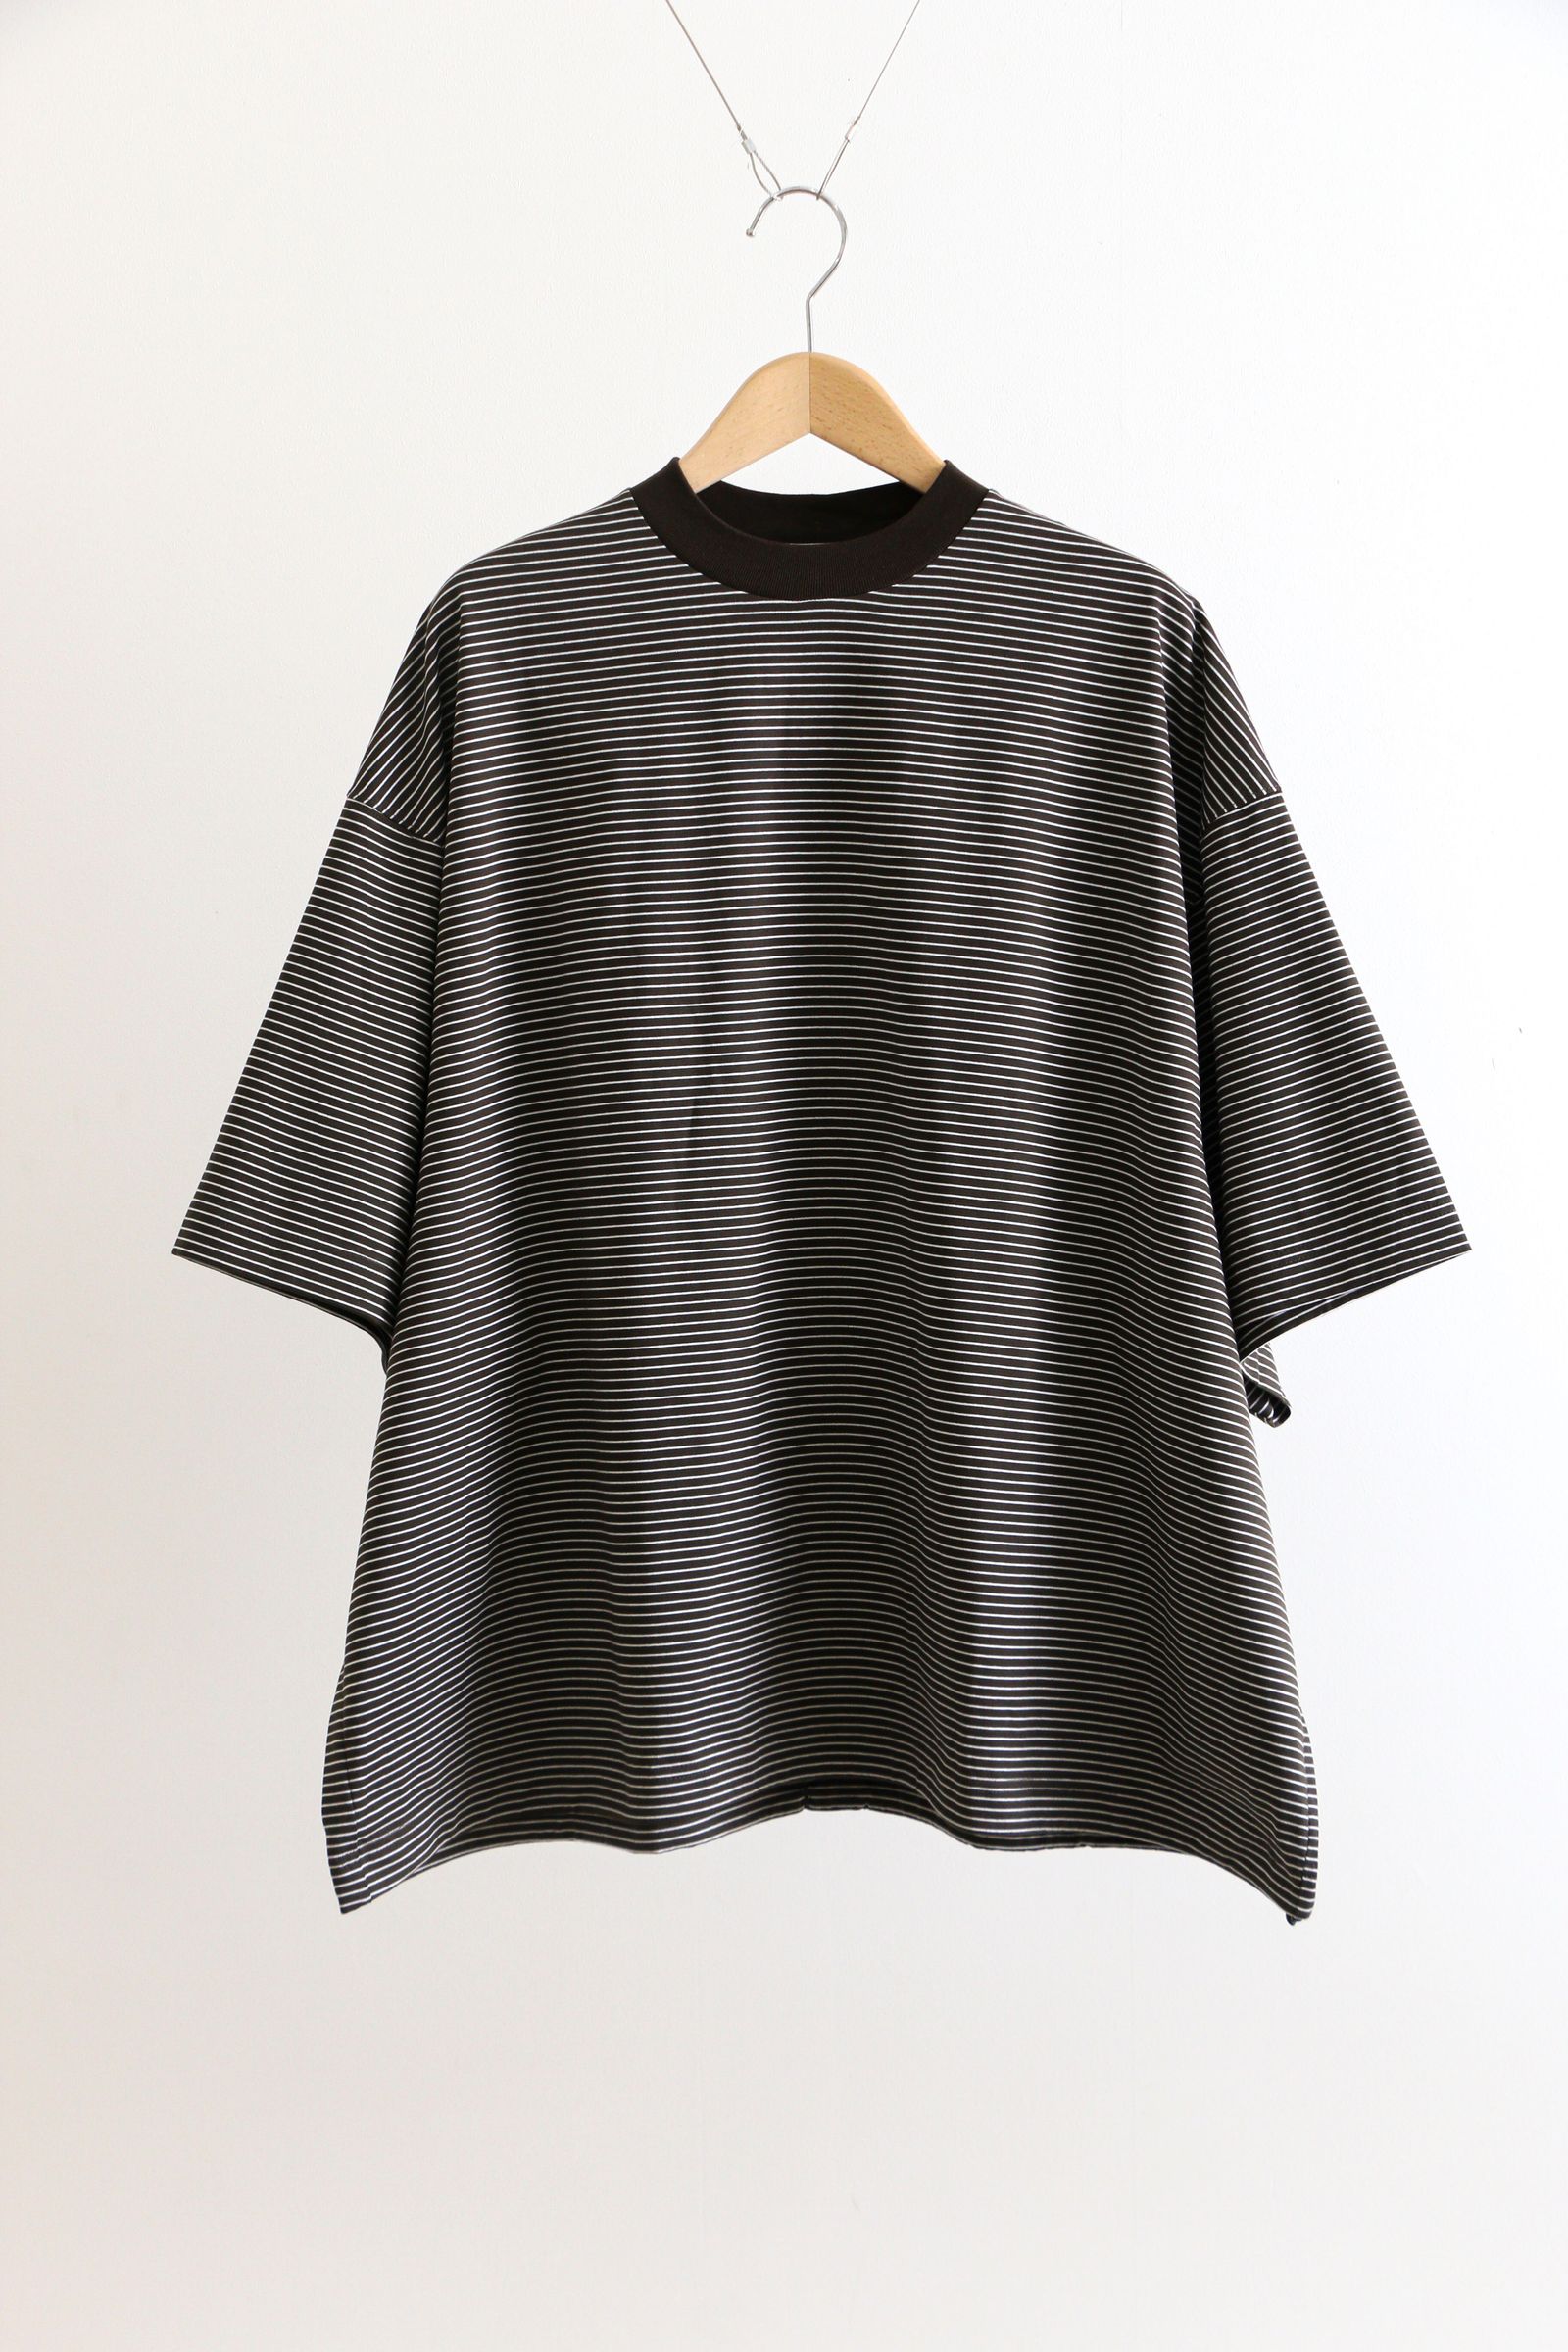 is-ness - BALLOON T SHIRT BLACK x WHITE / バルーンTシャツ ...